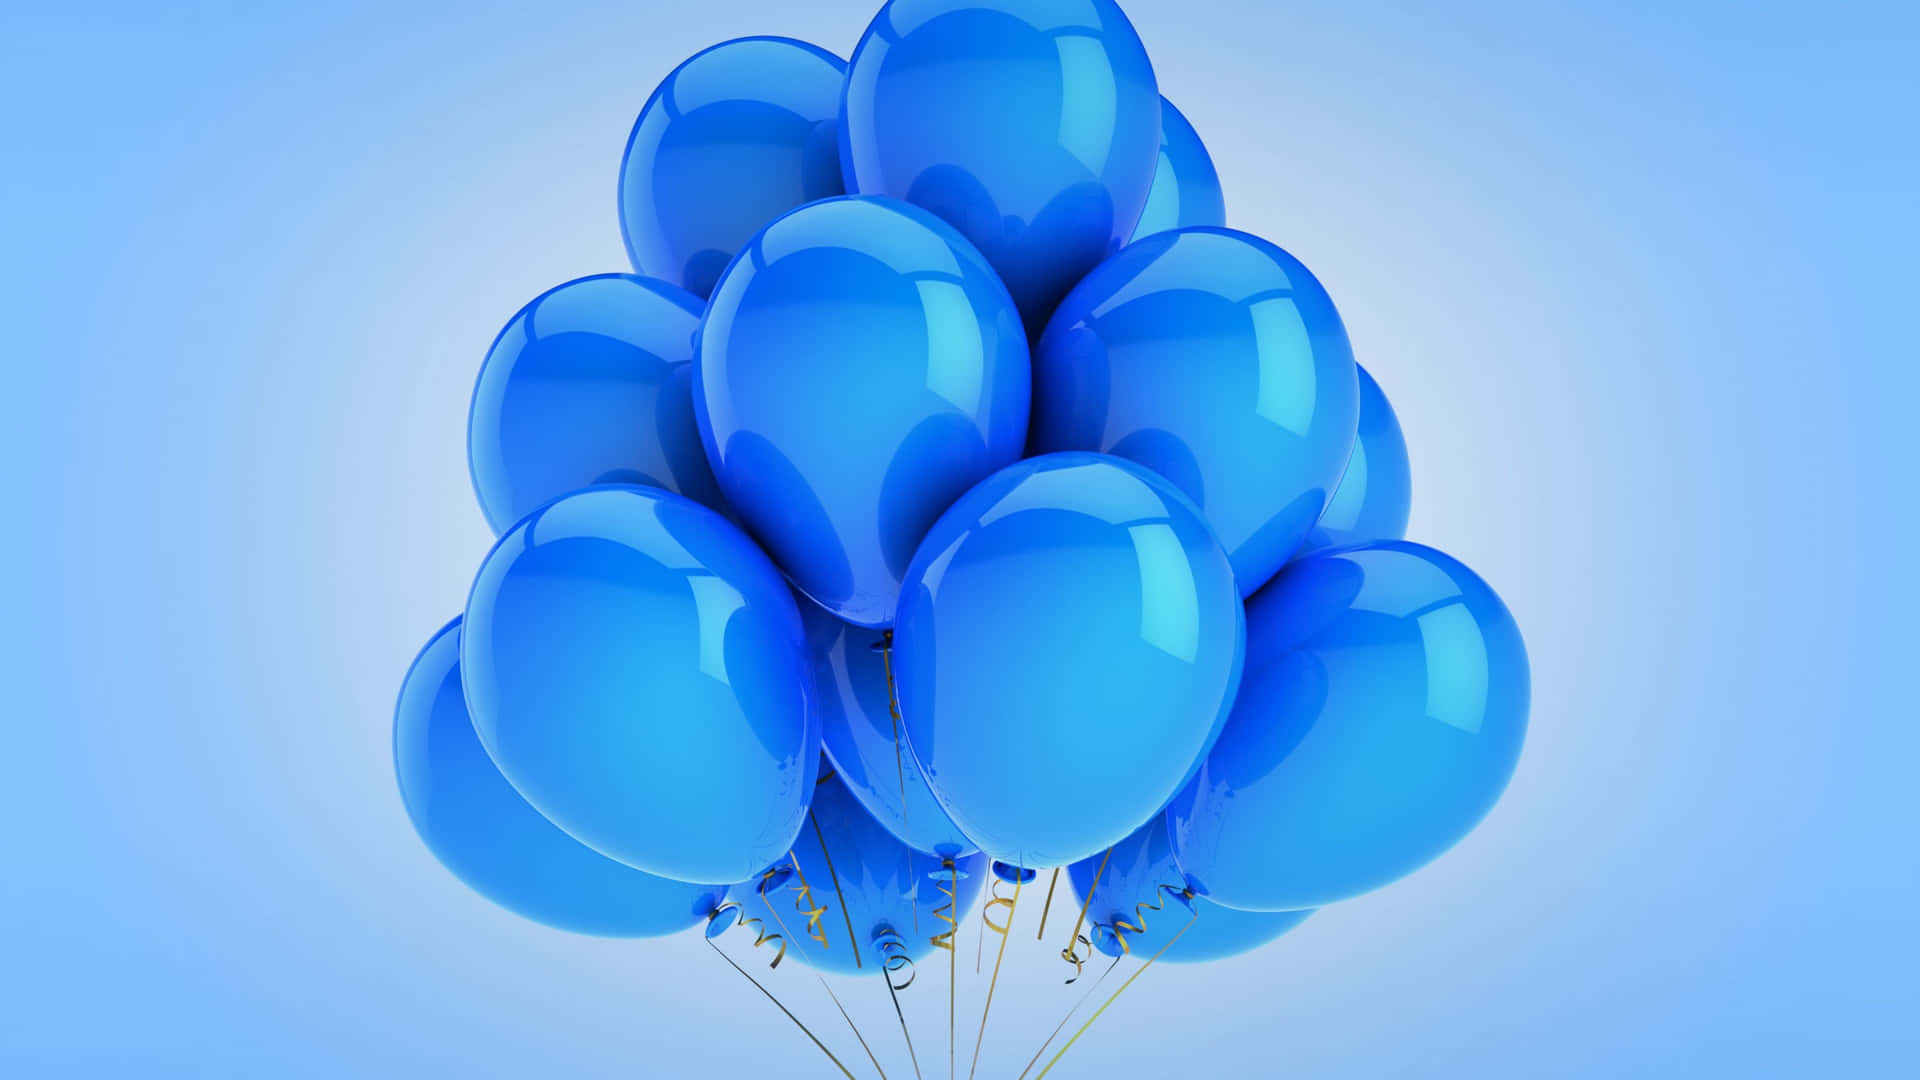 Farverigeballoner Flyver Mod En Klar Blå Himmel.